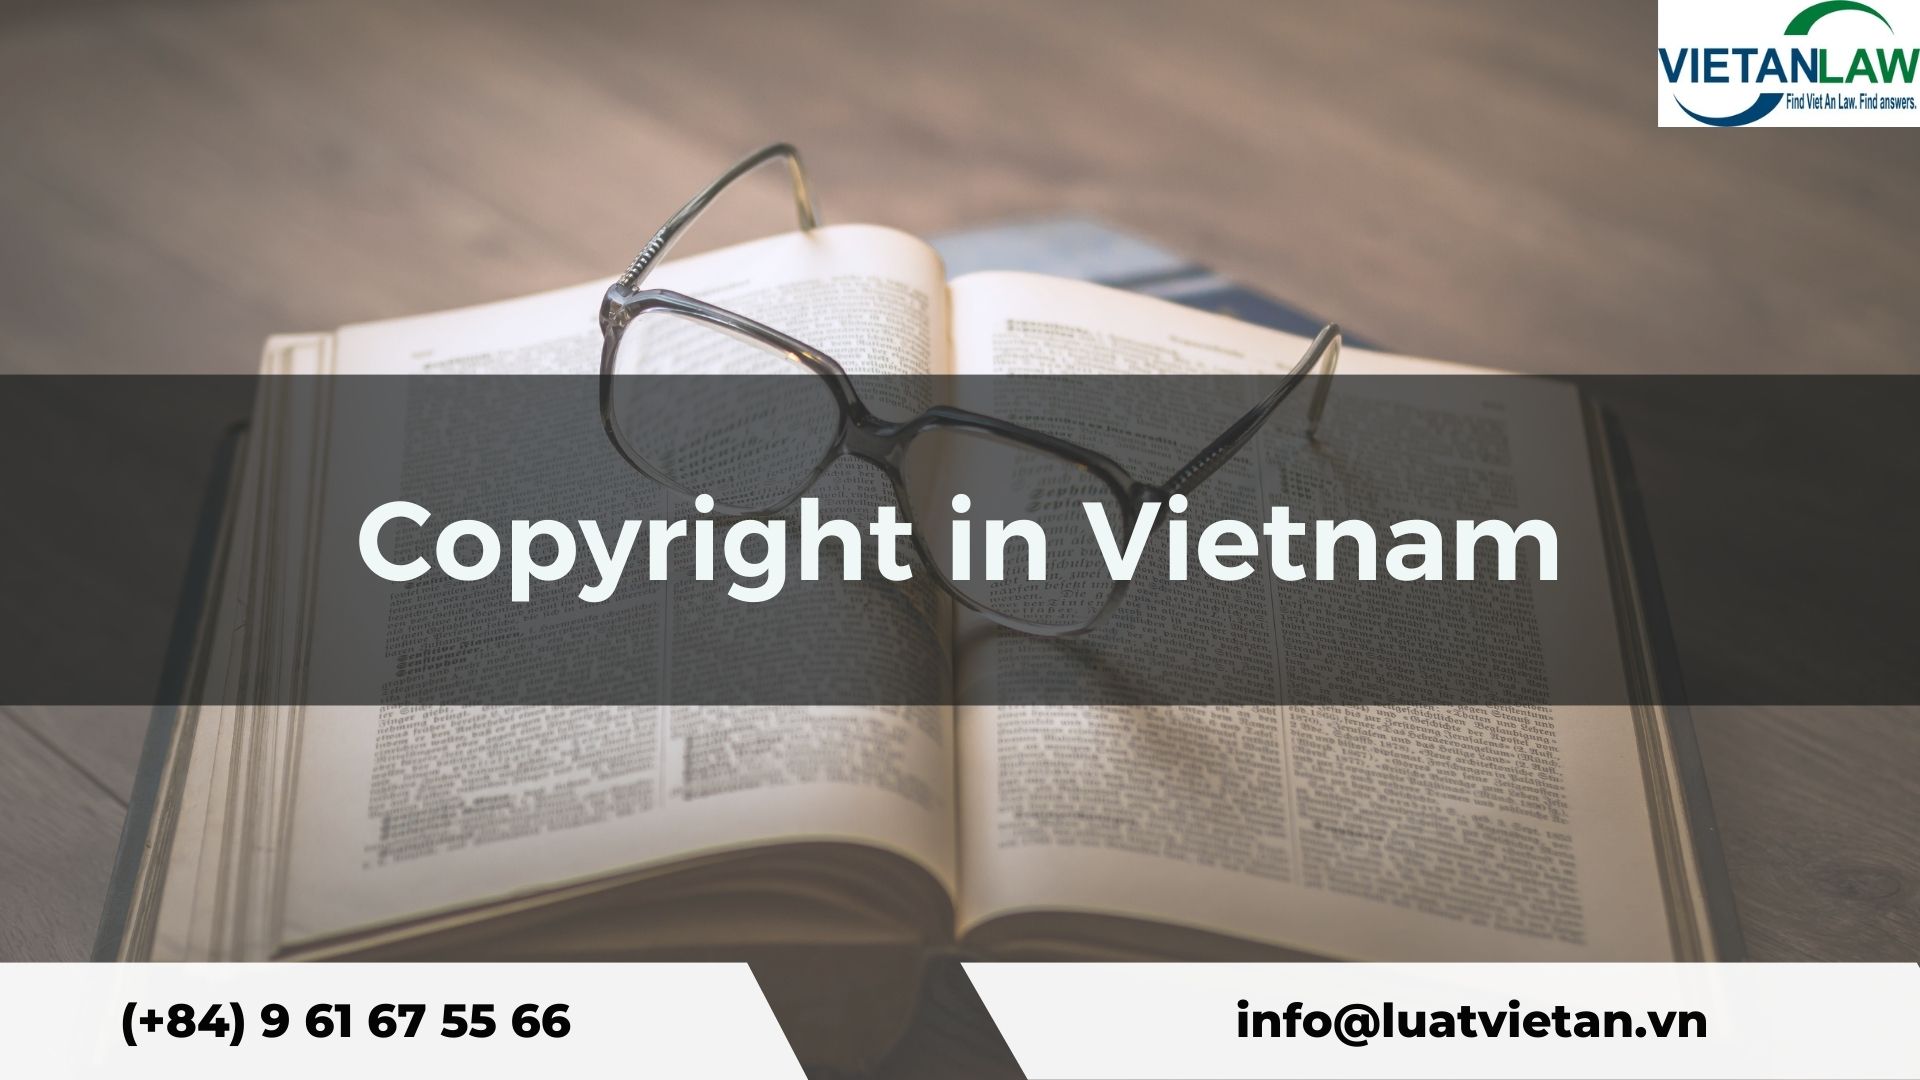 Copyright registration in Vietnam